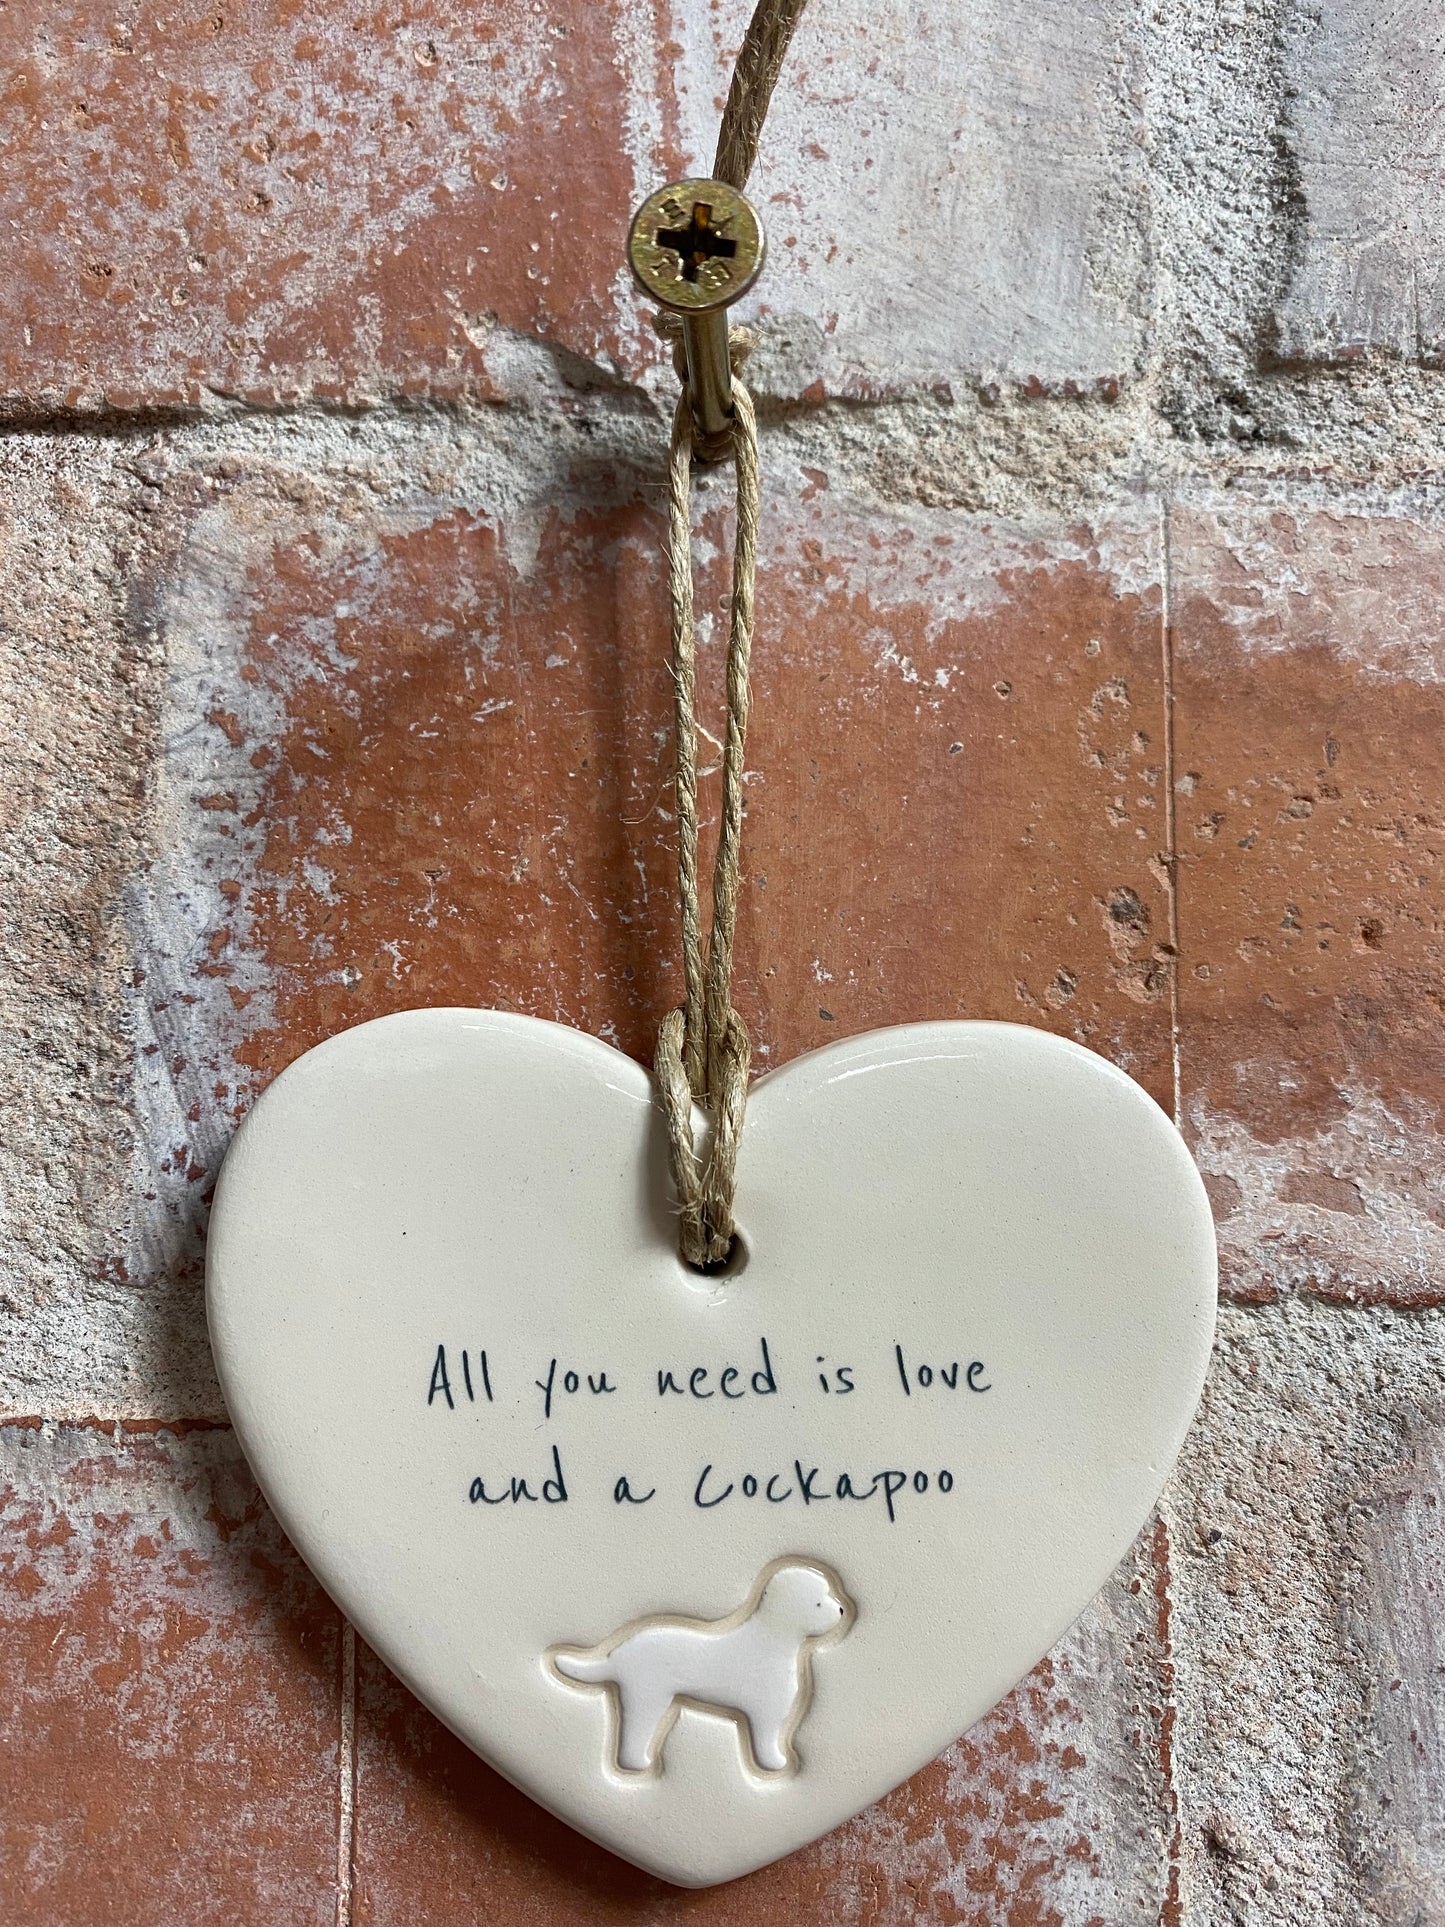 Cockapoo ceramic heart